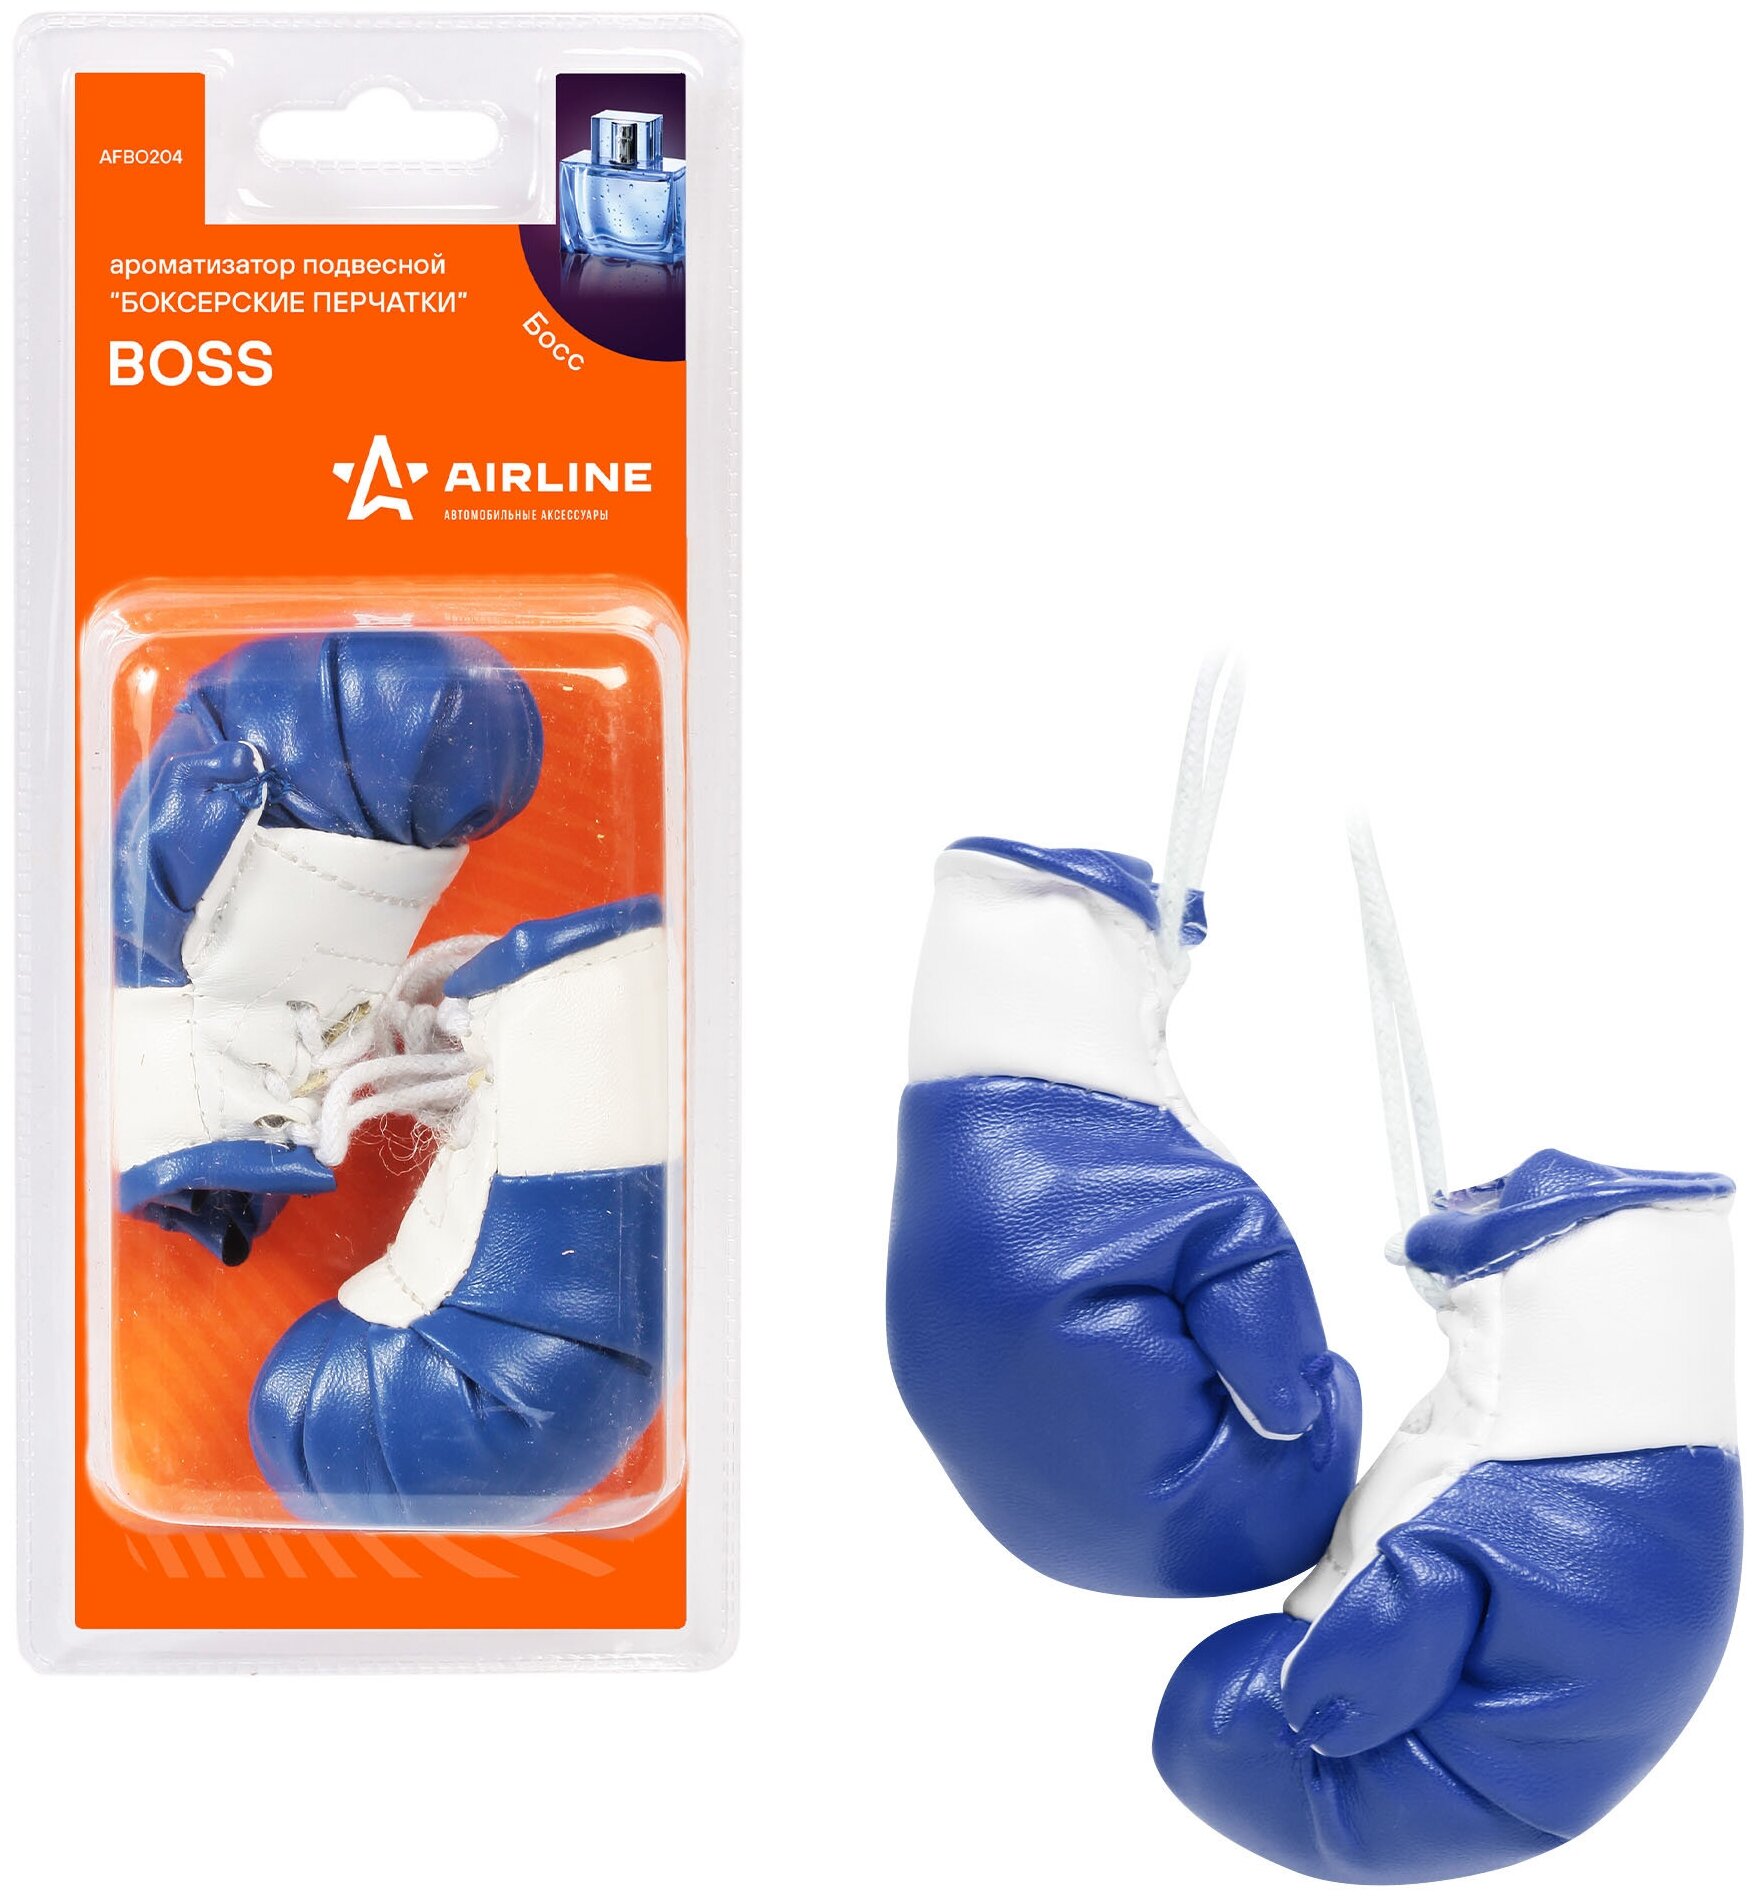 Ароматизатор подвесной "Боксерские перчатки" Boss AFB0204 AIRLINE